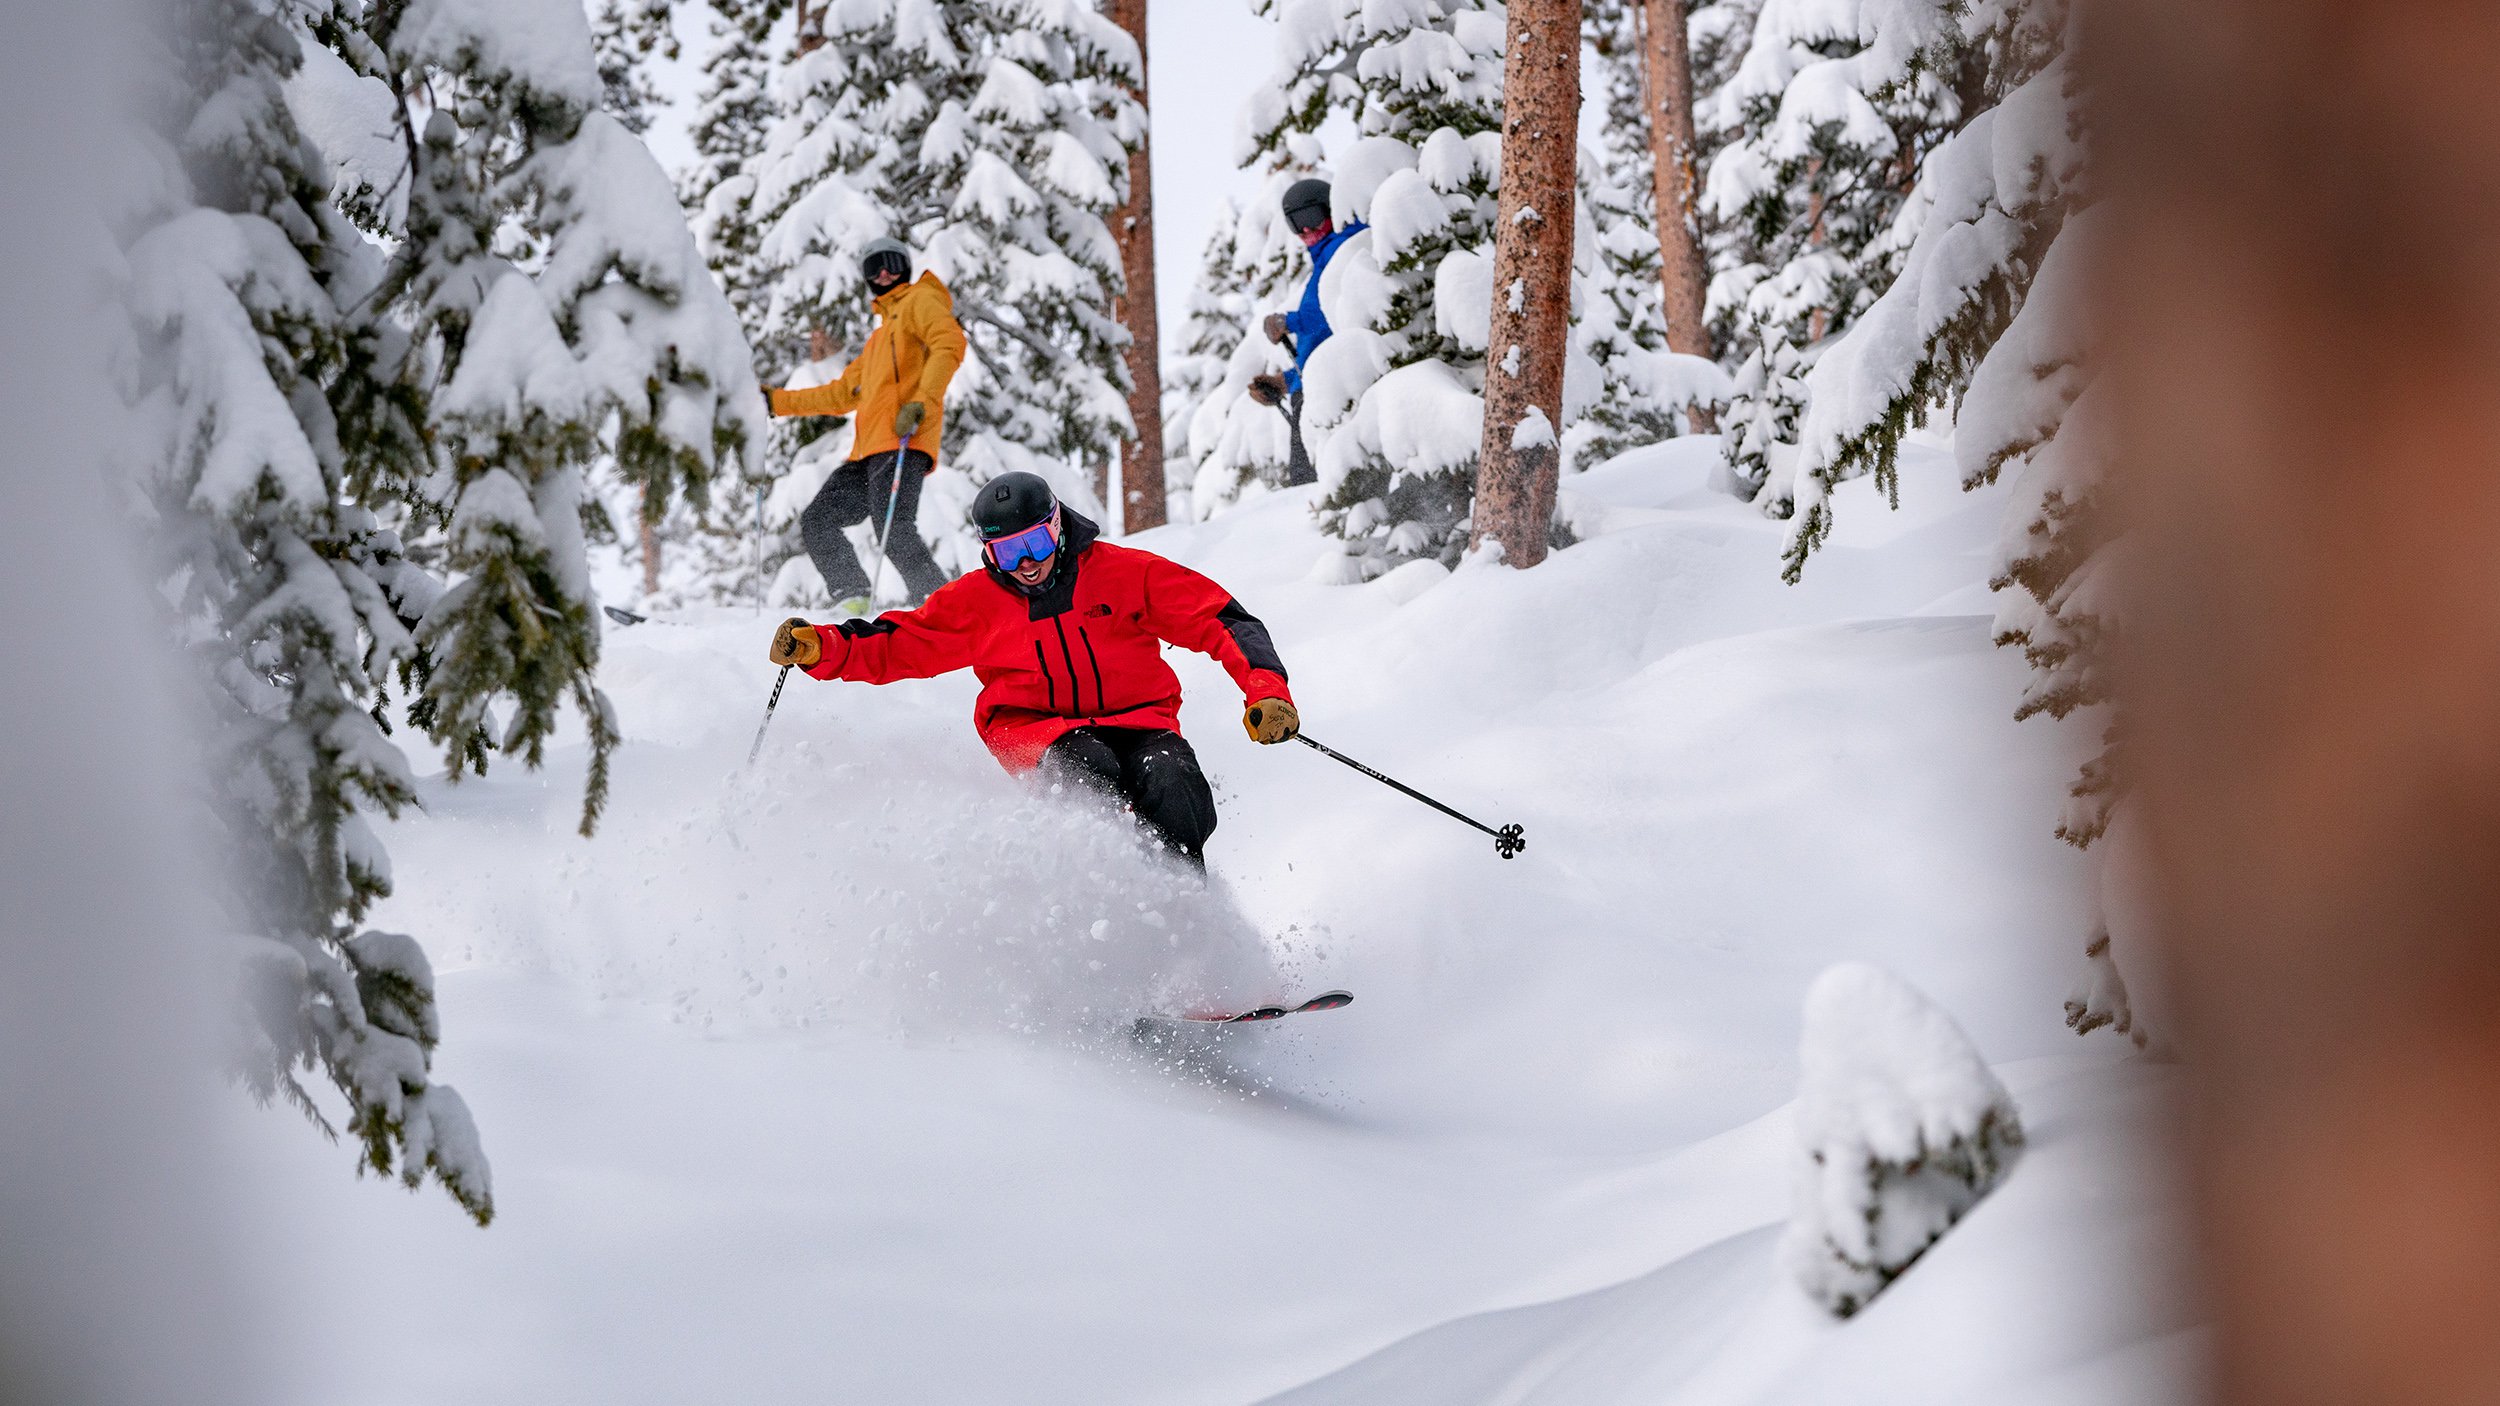 Skier rides fresh powder at winter park resort